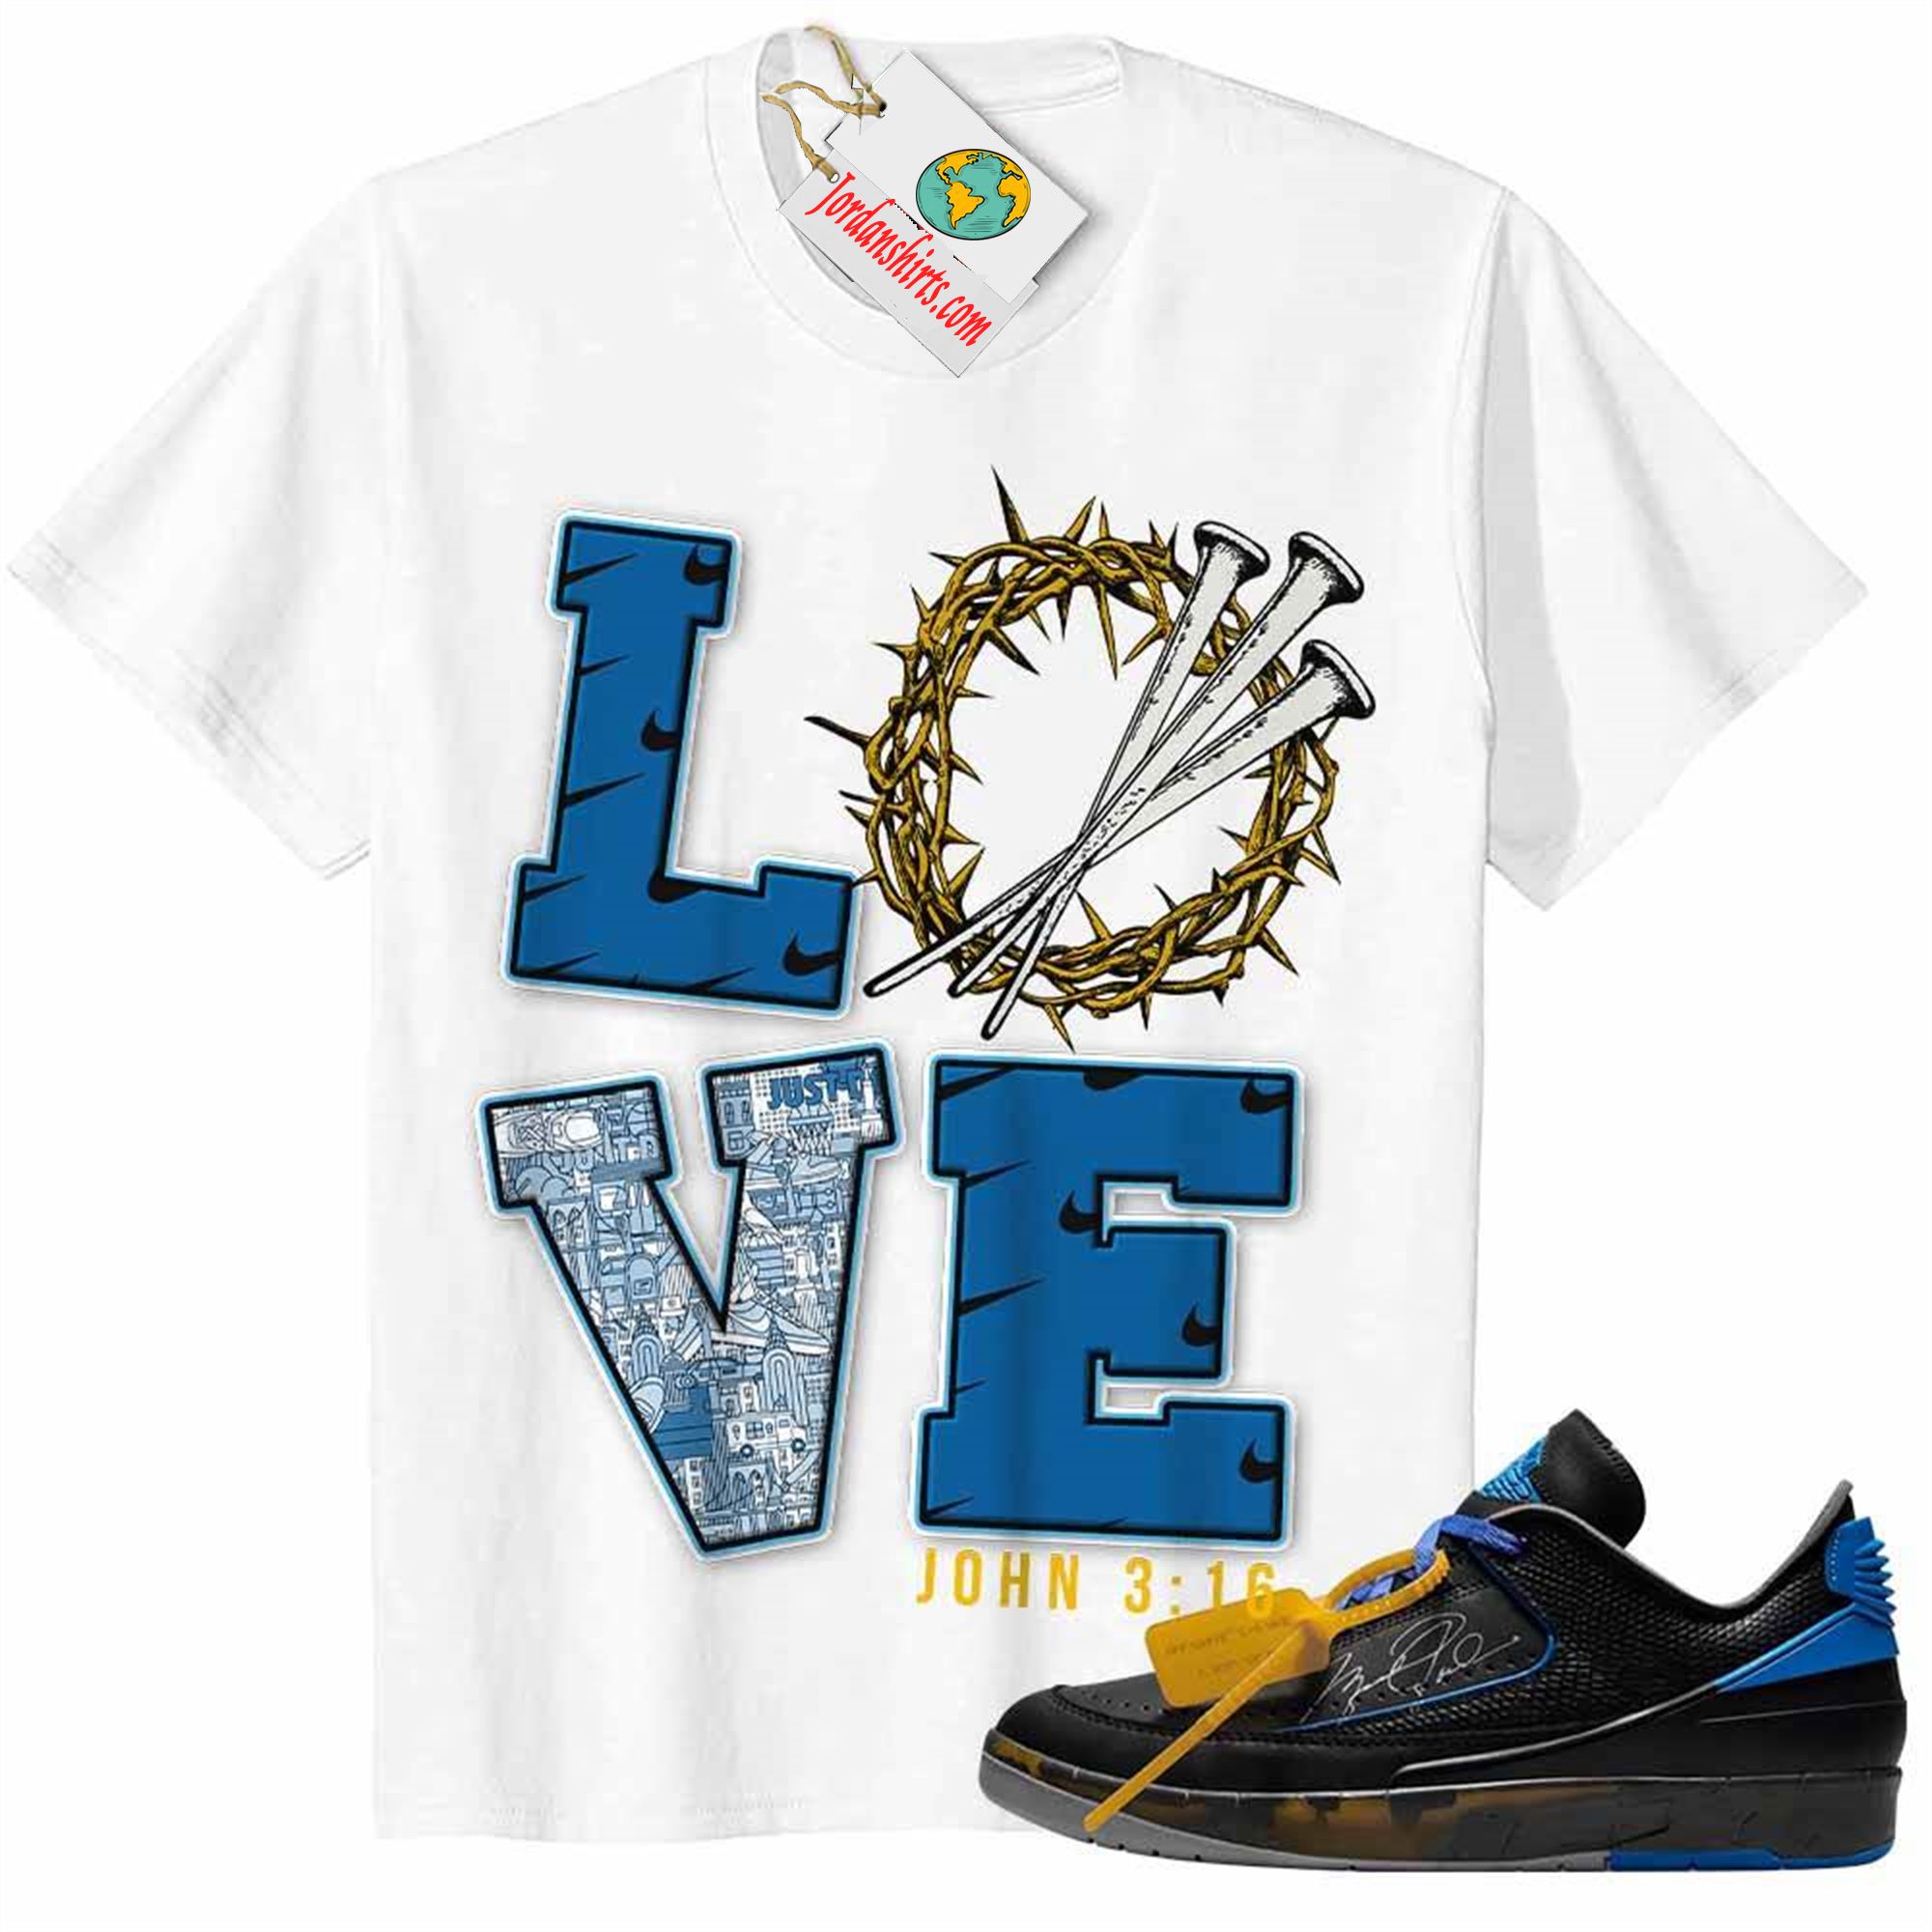 Jordan 2 Shirt, Love John 316 White Air Jordan 2 Low X Off-white Black And Varsity Royal 2s Size Up To 5xl